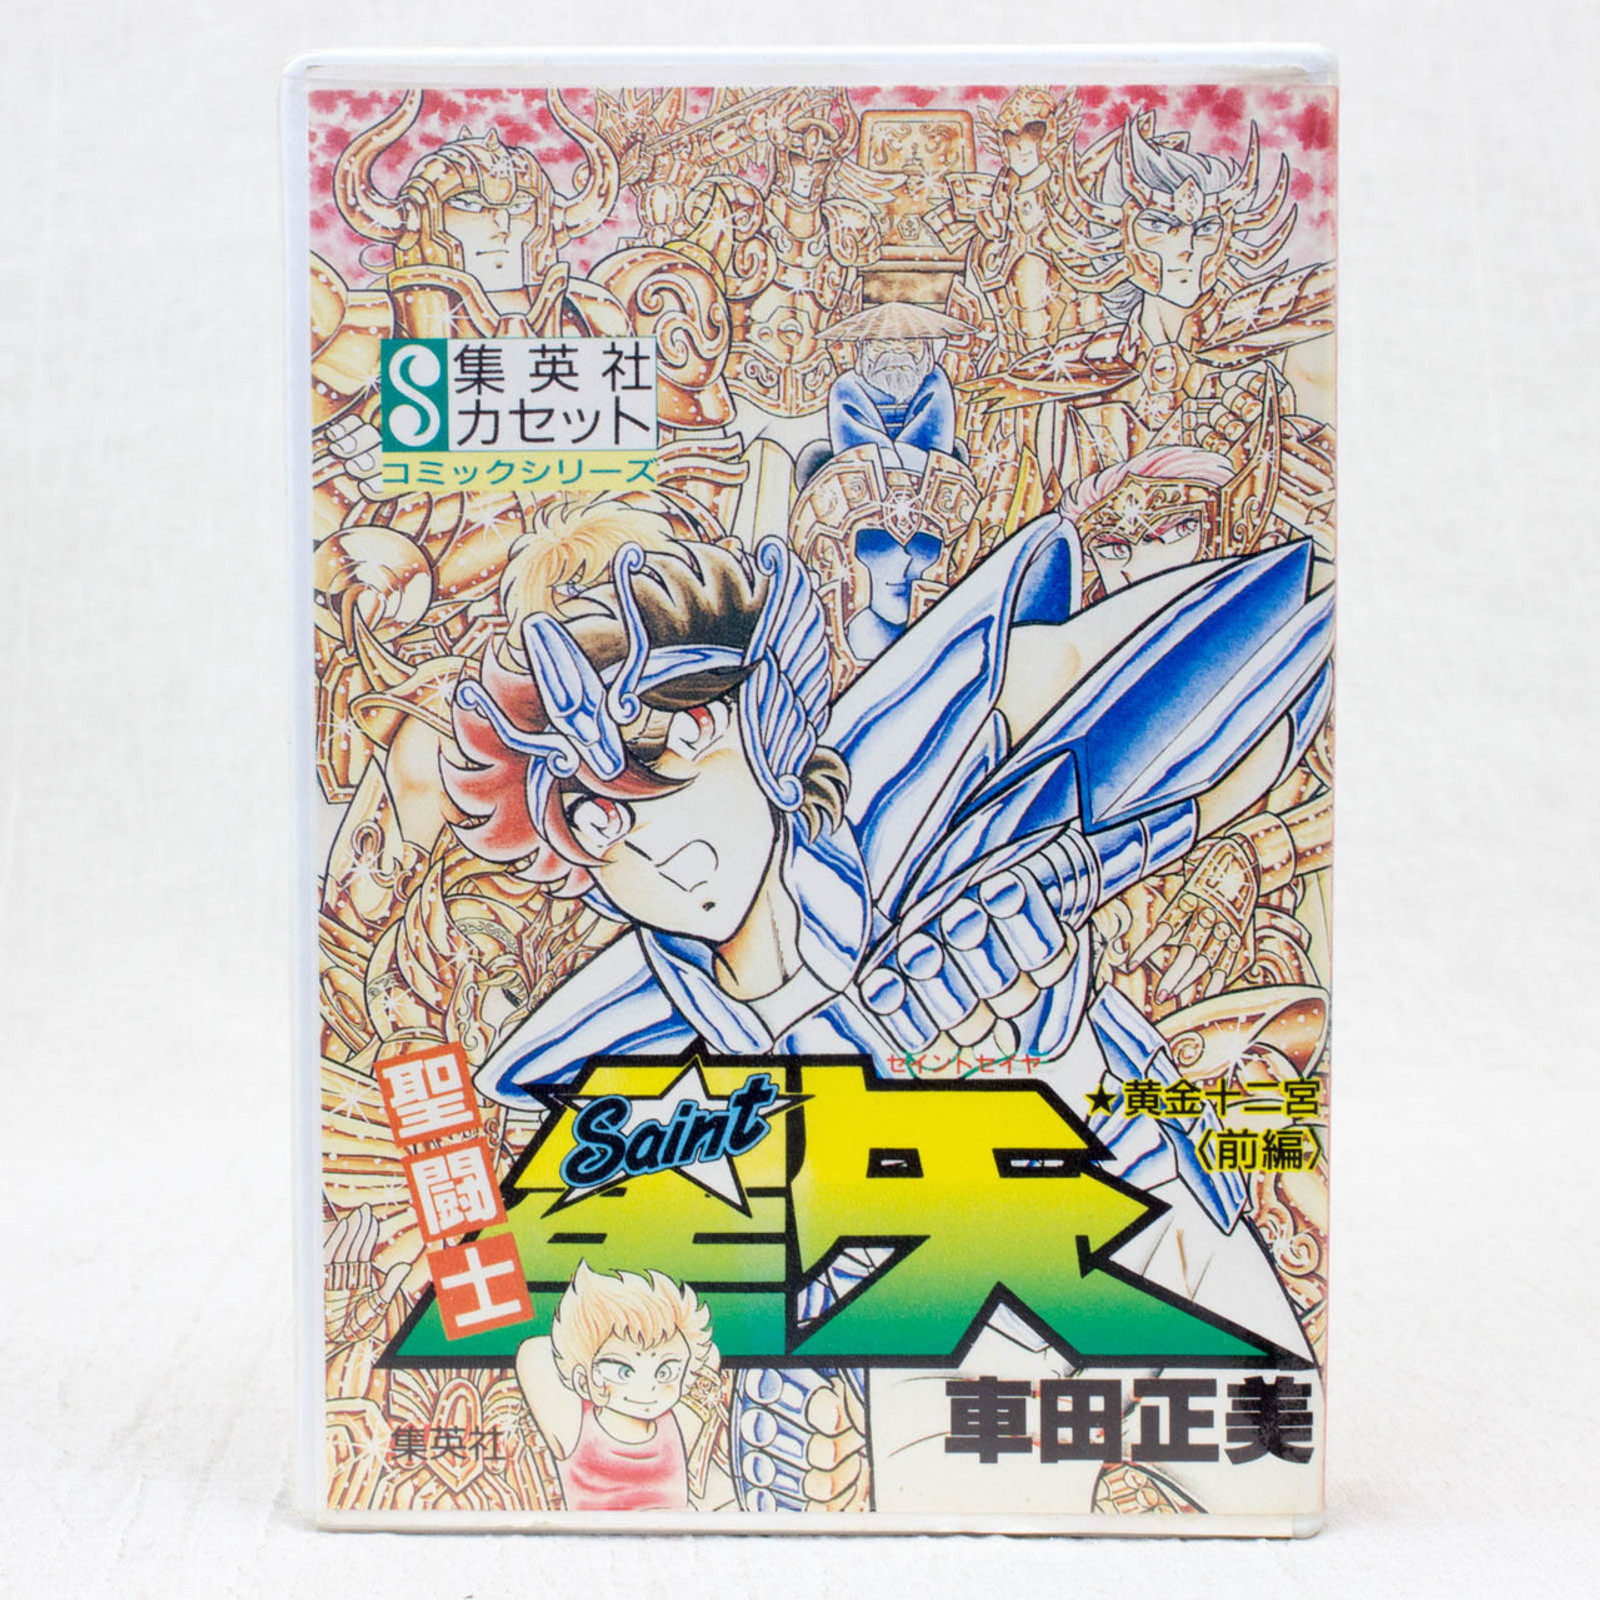 Saint Seiya Drama Casette Tape Ougon 12 Kyu Vol.1 JAPAN ANIME MANGA